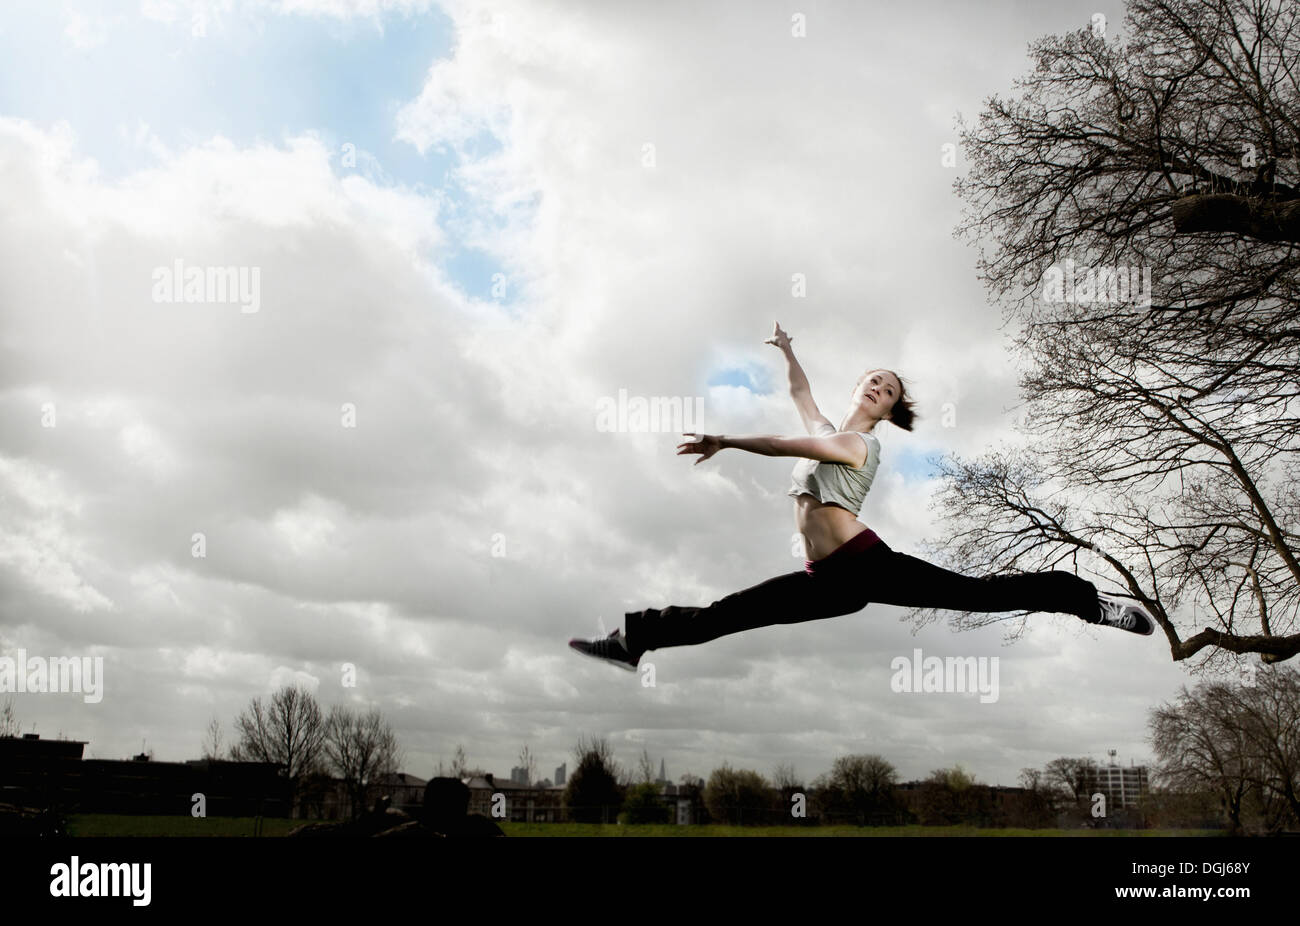 Woman doing ballet leap Stock Photo